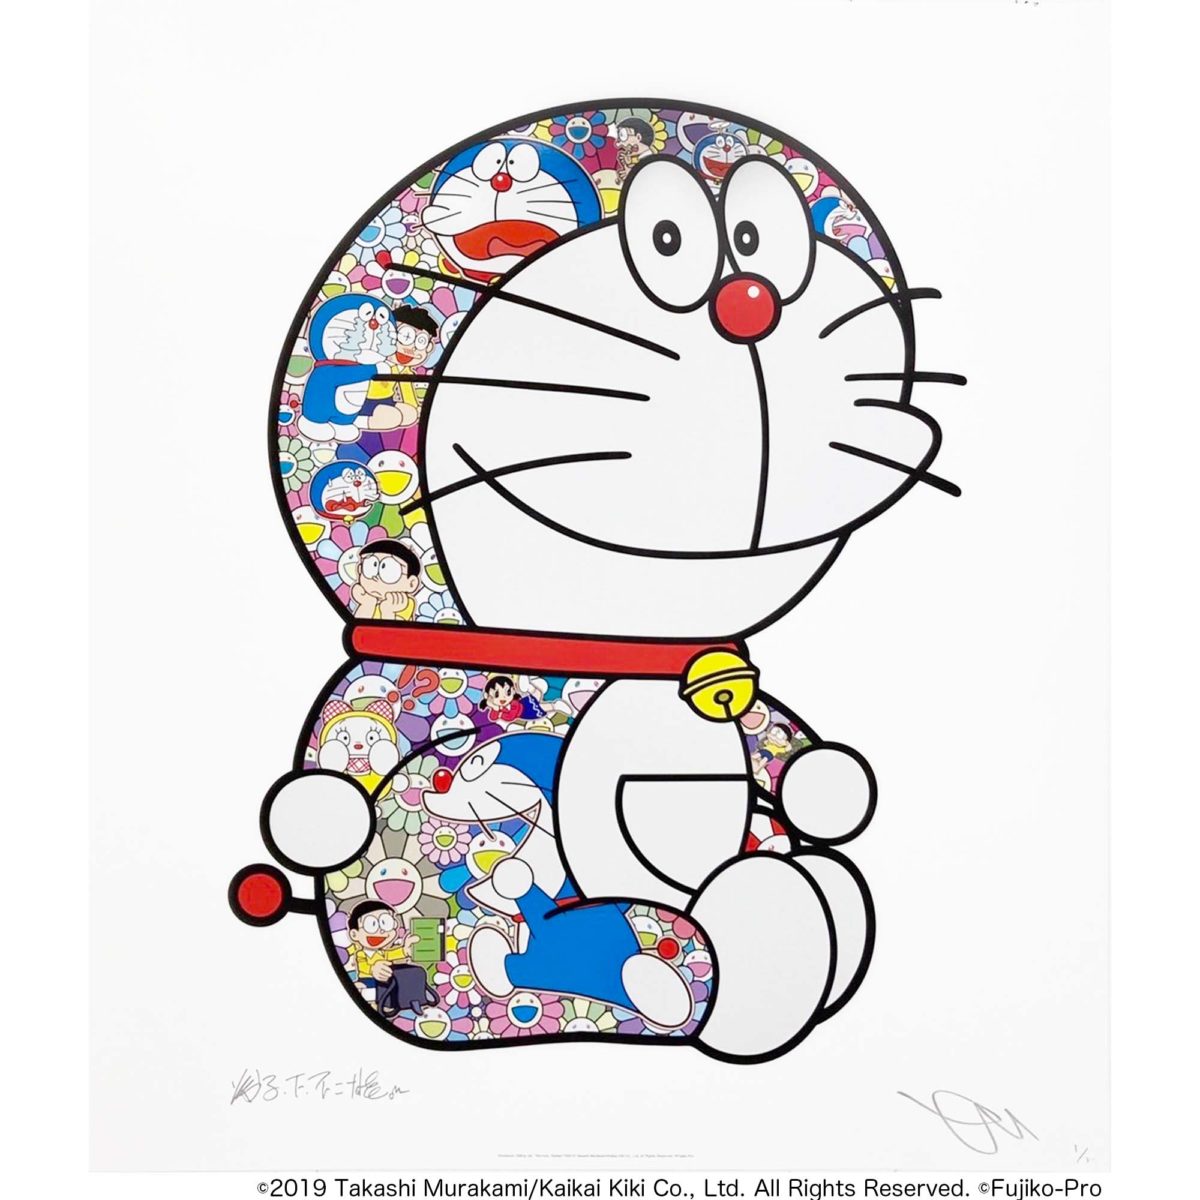 Takashi Murakami - Doraemon Sitting up: "Yoo-hoo, Nobital"